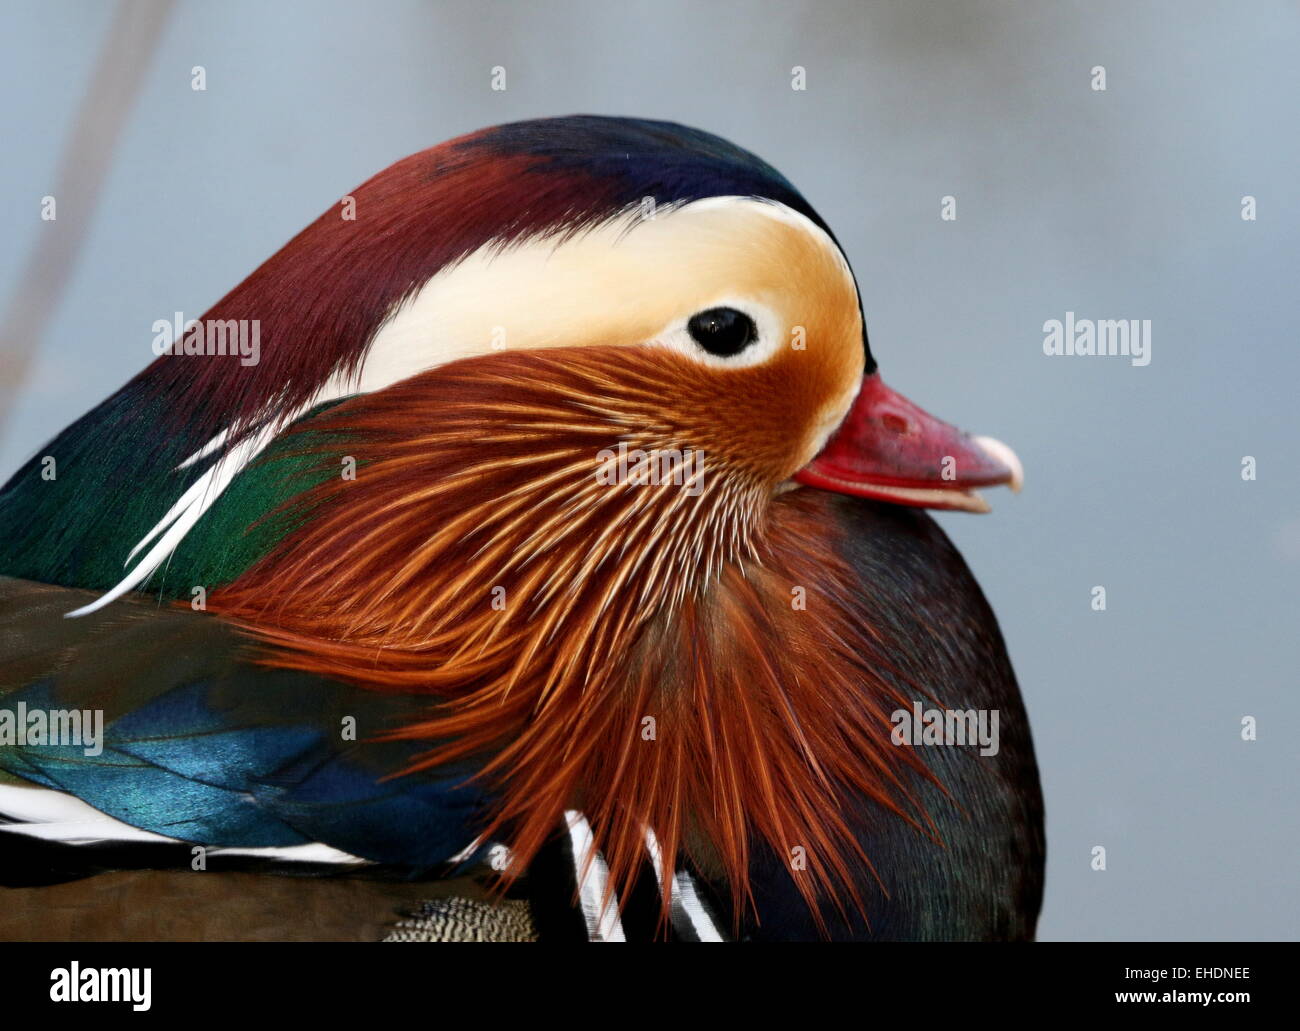 Male Mandarin Duck (Aix galericulata) close-up portrait, seen in profile. Stock Photo